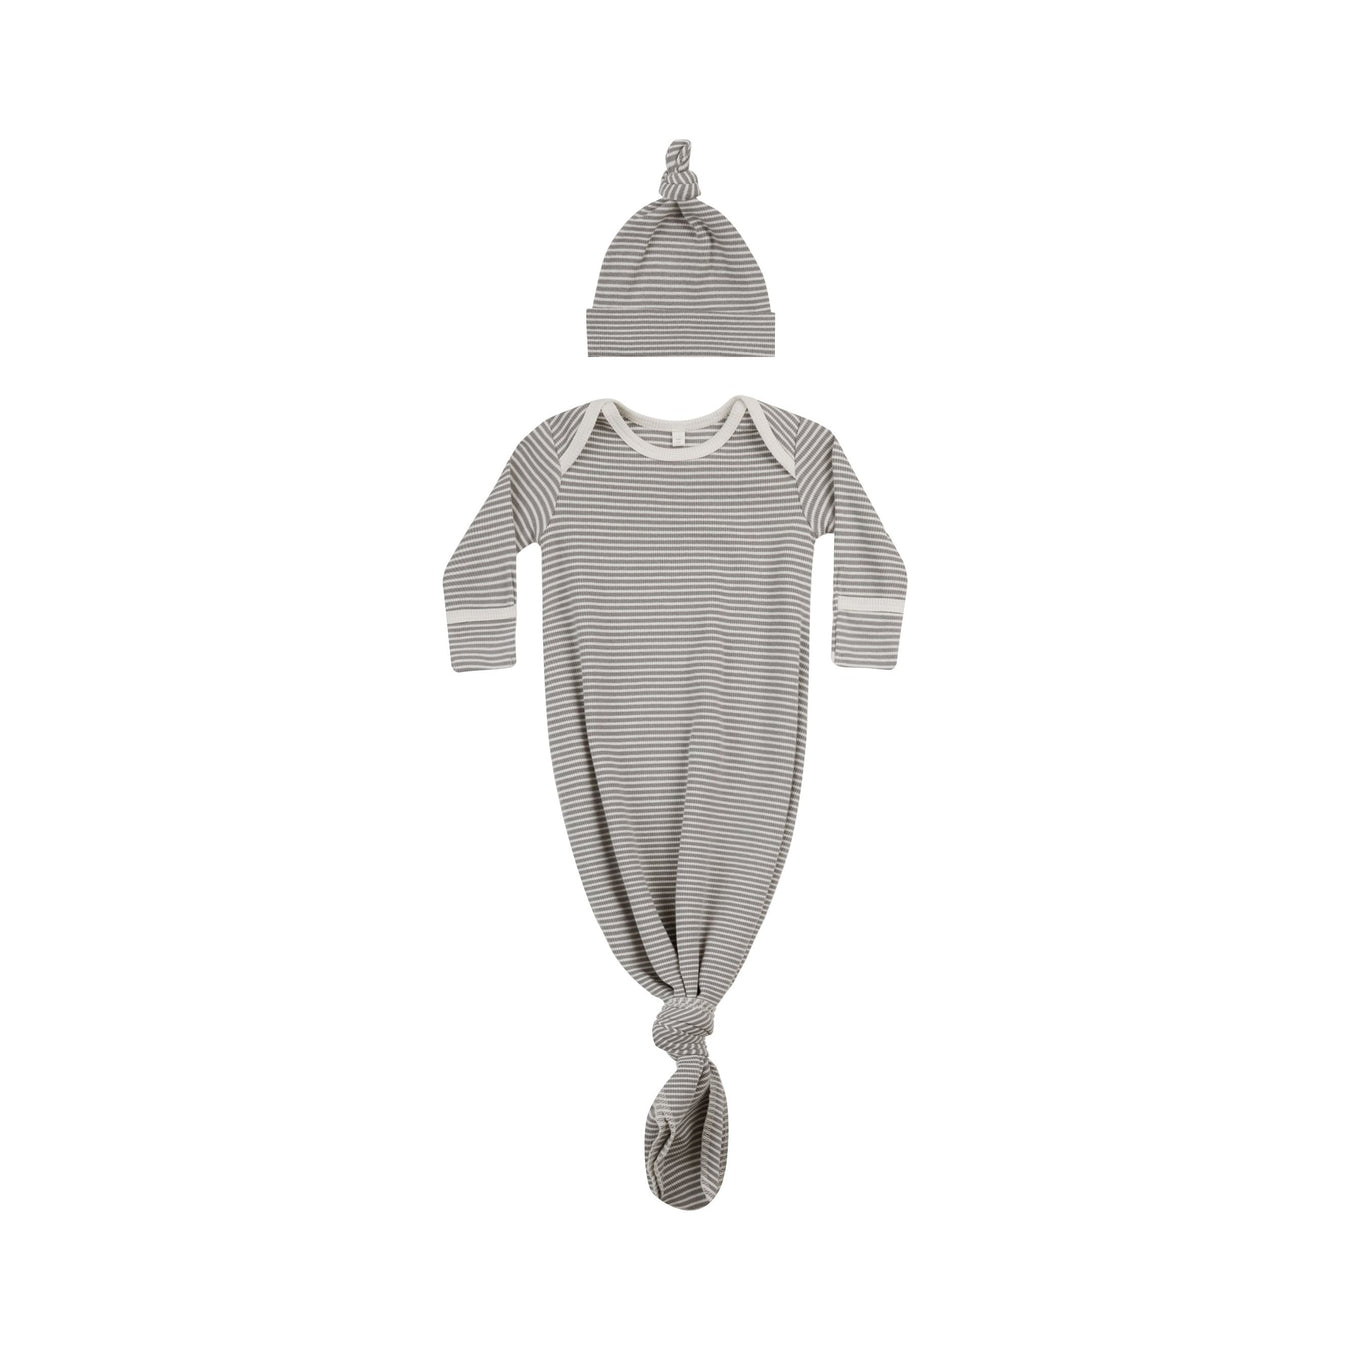 Unisex - Sleep - Pajamas - Baby Gown